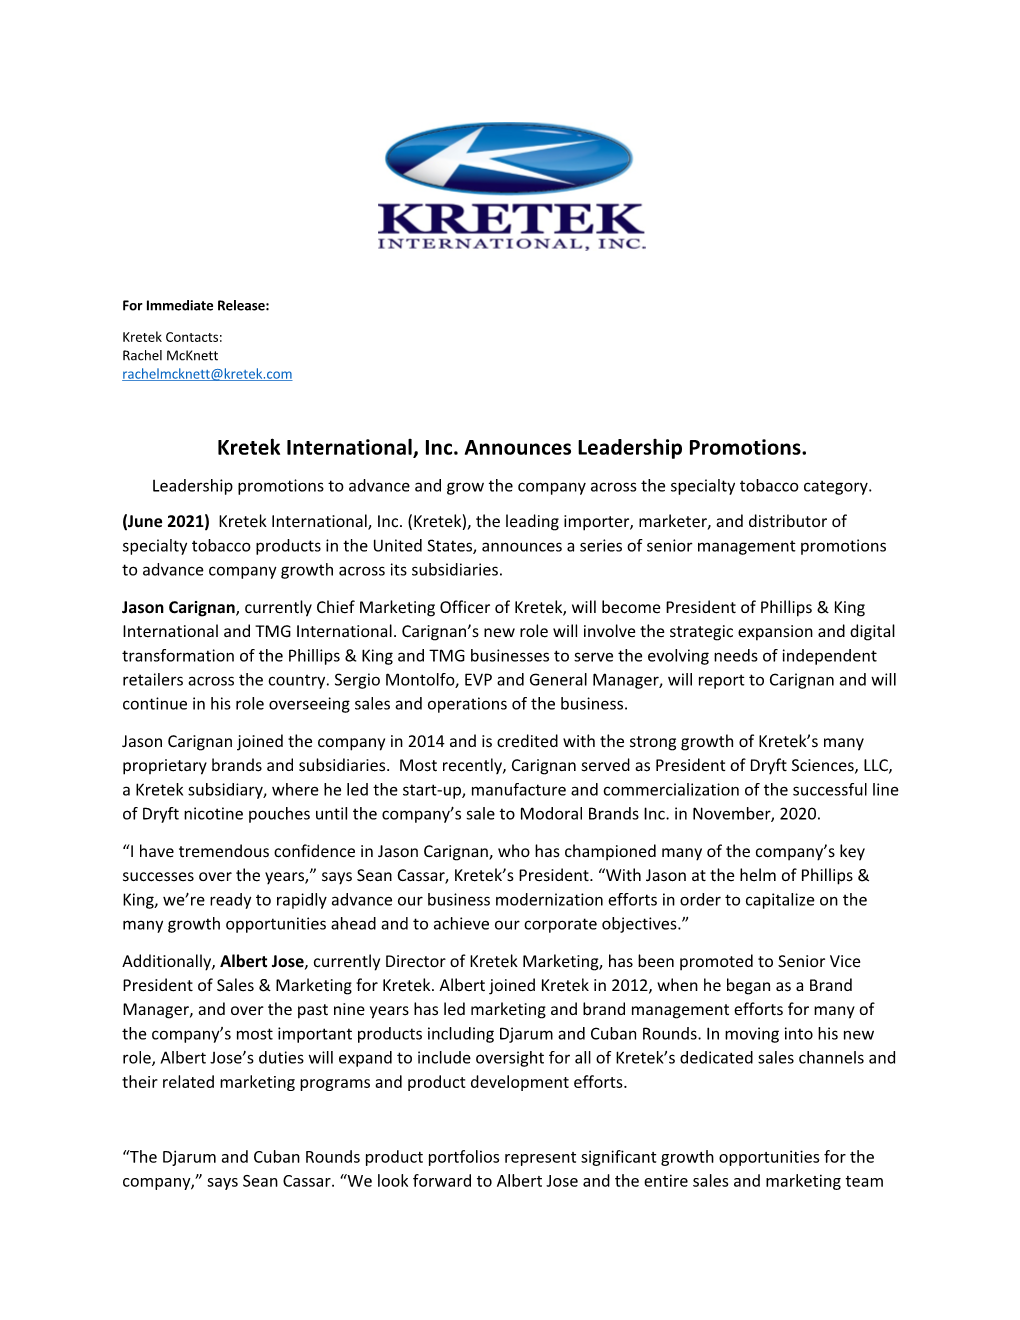 Kretek International, Inc. Announces Leadership Promotions. Leadership Promotions to Advance and Grow the Company Across the Specialty Tobacco Category